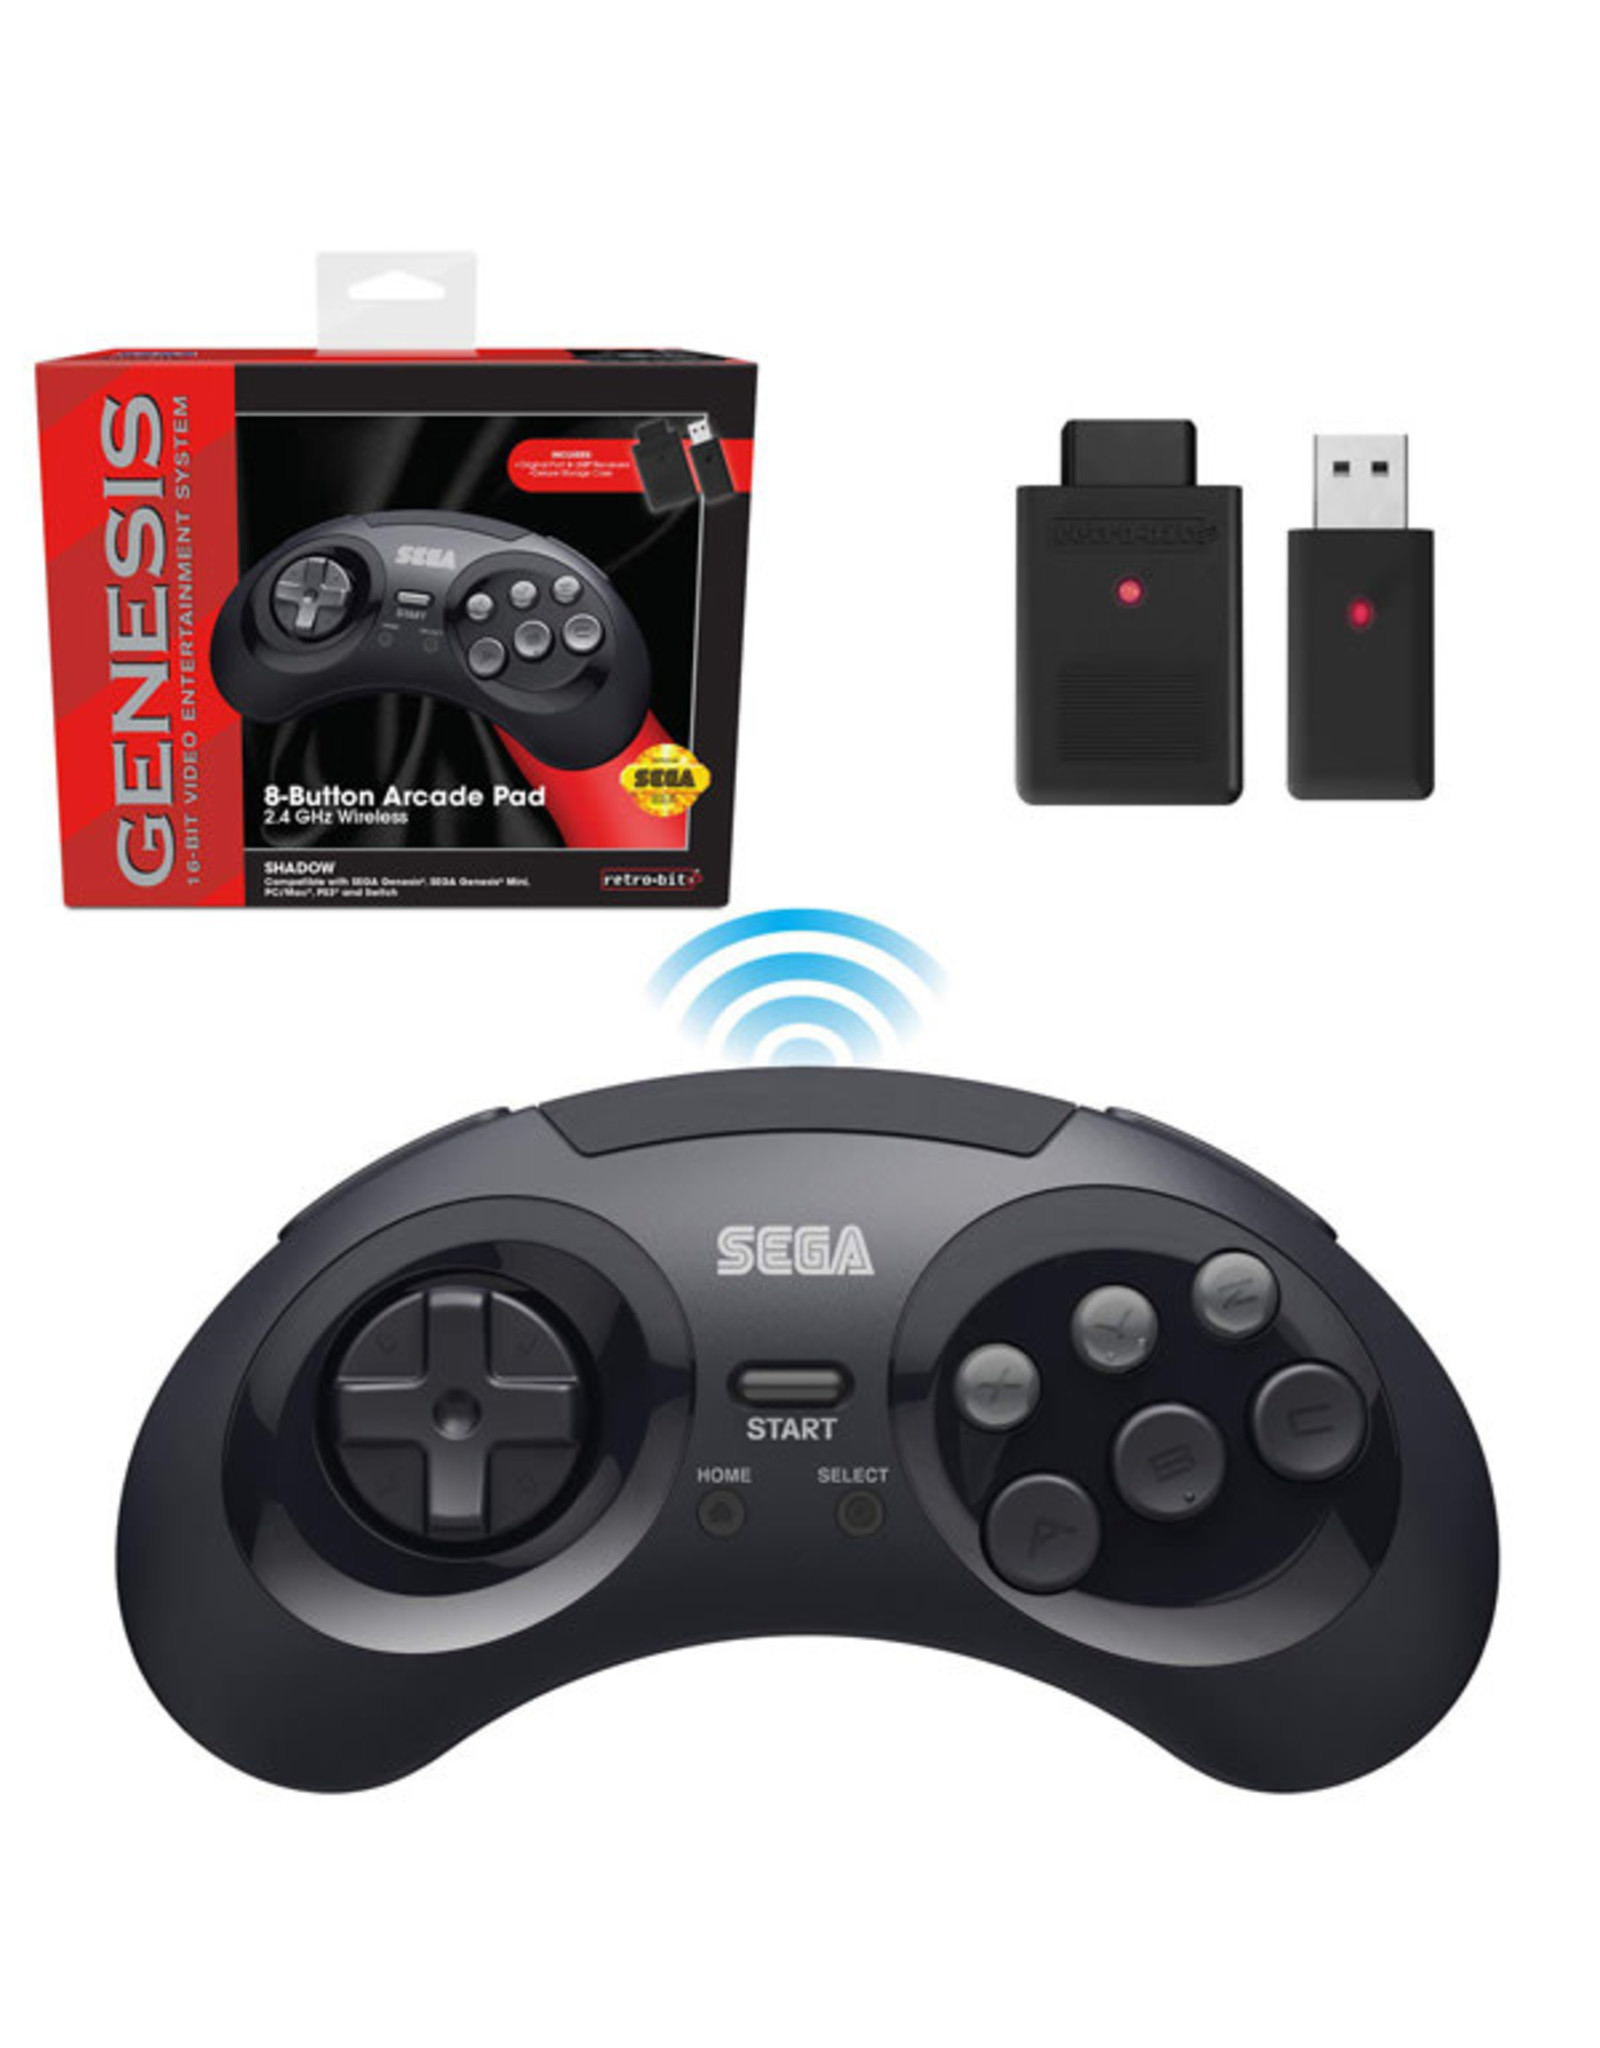 Retro-Bit retro-bit - Sega Genesis - 8-Button Arcade Pad (Black) [2.4GHz Wireless Controller]